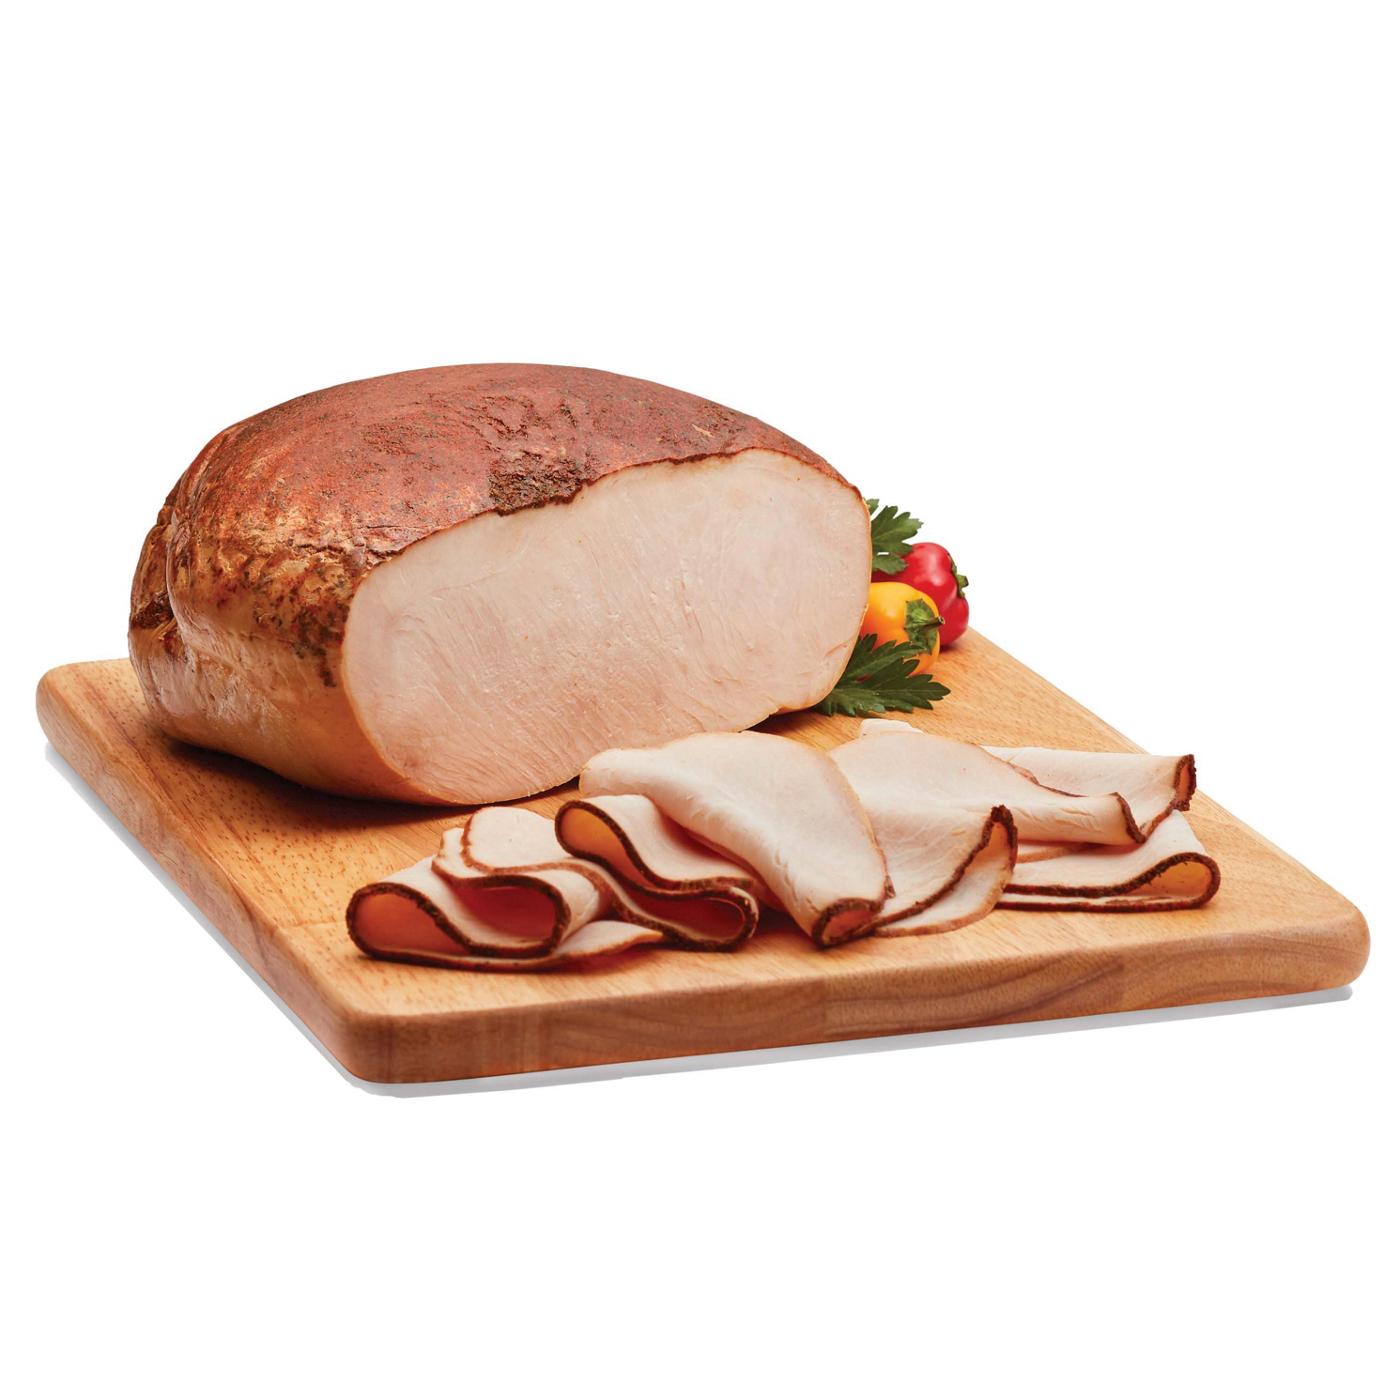 H-E-B Deli Oven Roasted Turkey Breast, Sandwich Sliced; image 4 of 4